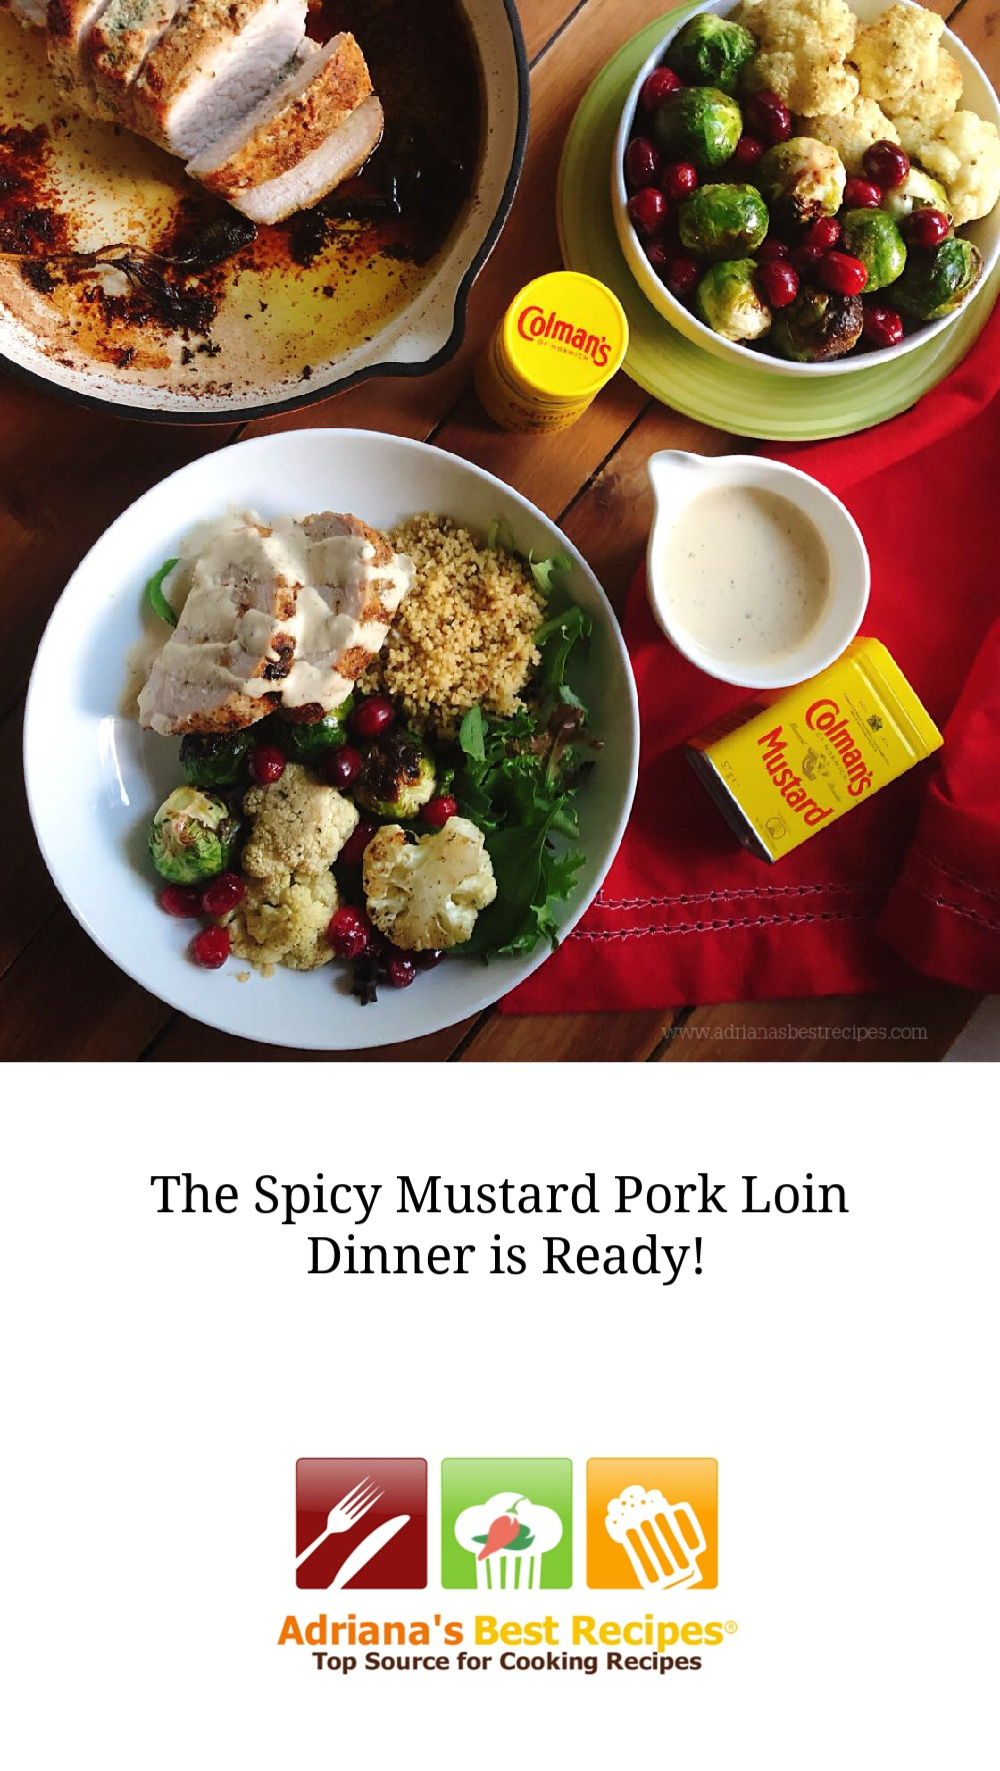 Cook the Spicy Mustard Pork Loin Dinner